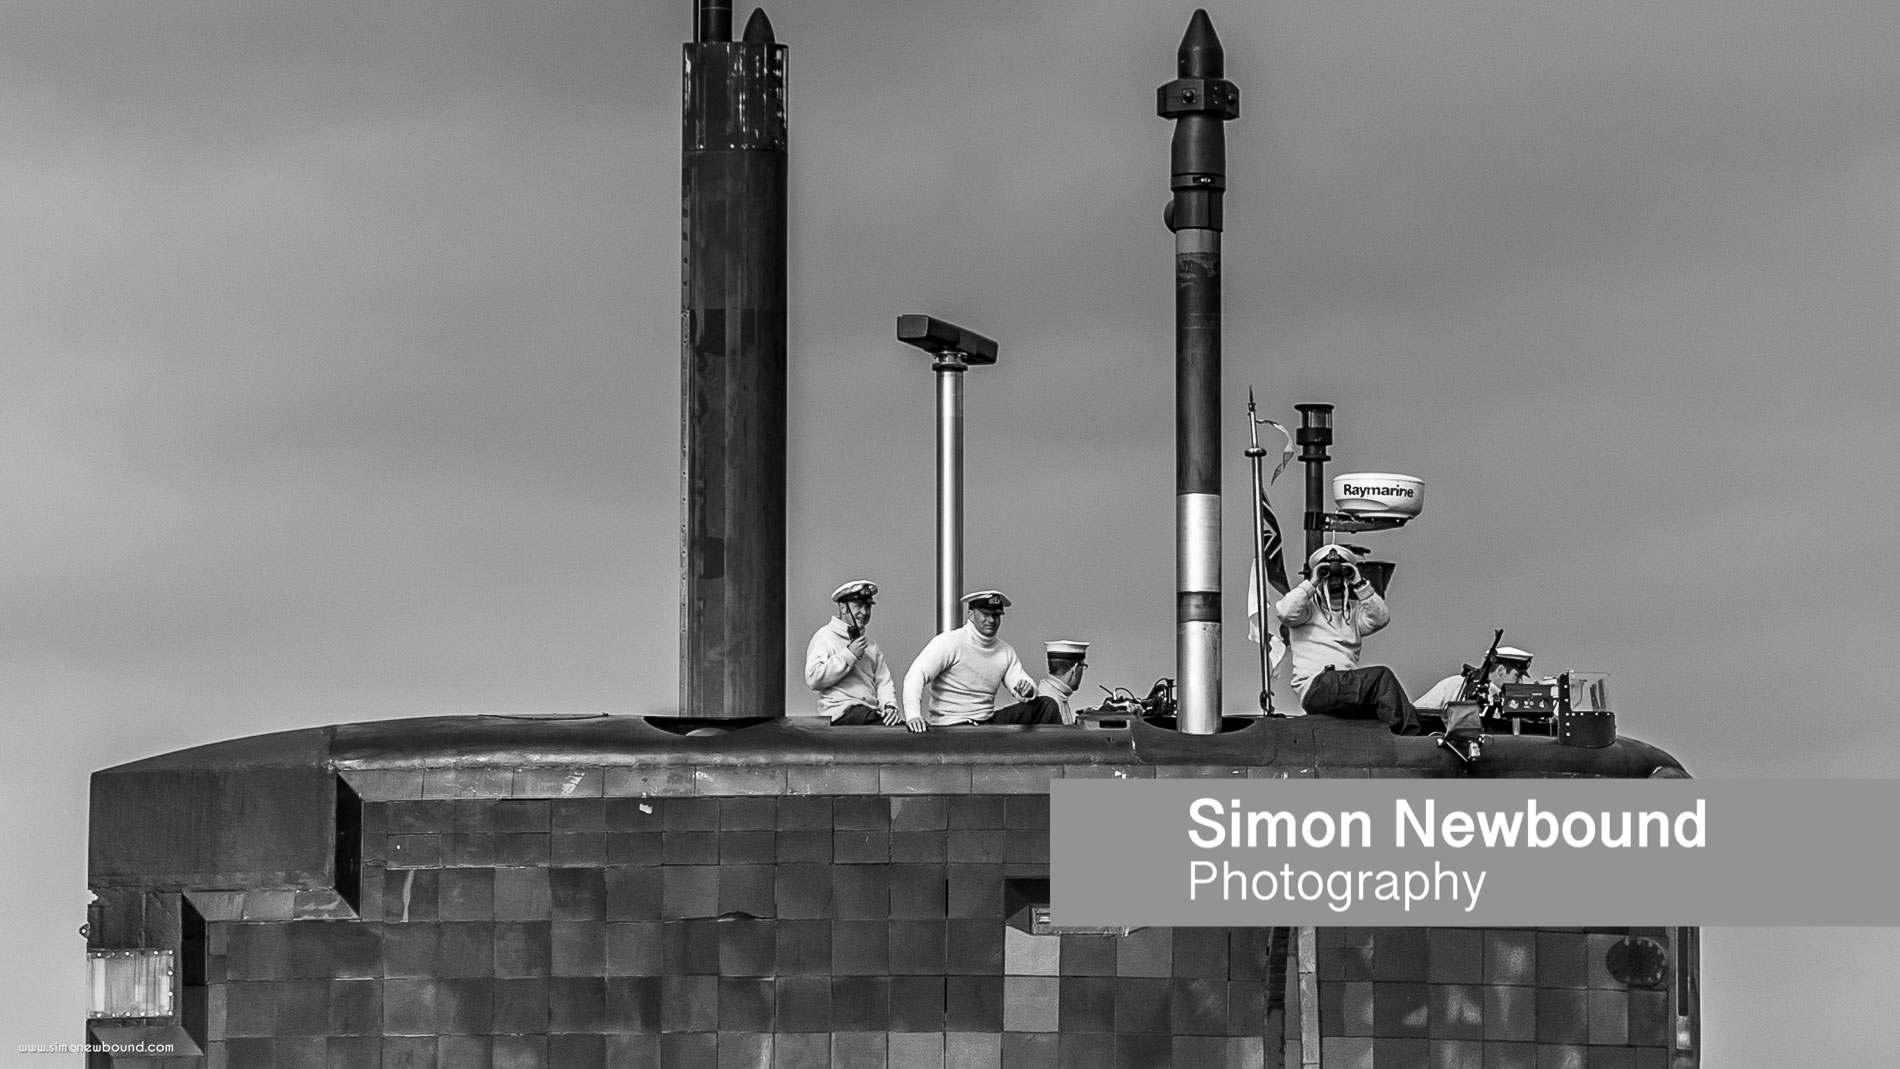 HMS Triumph @ Simon Newbound